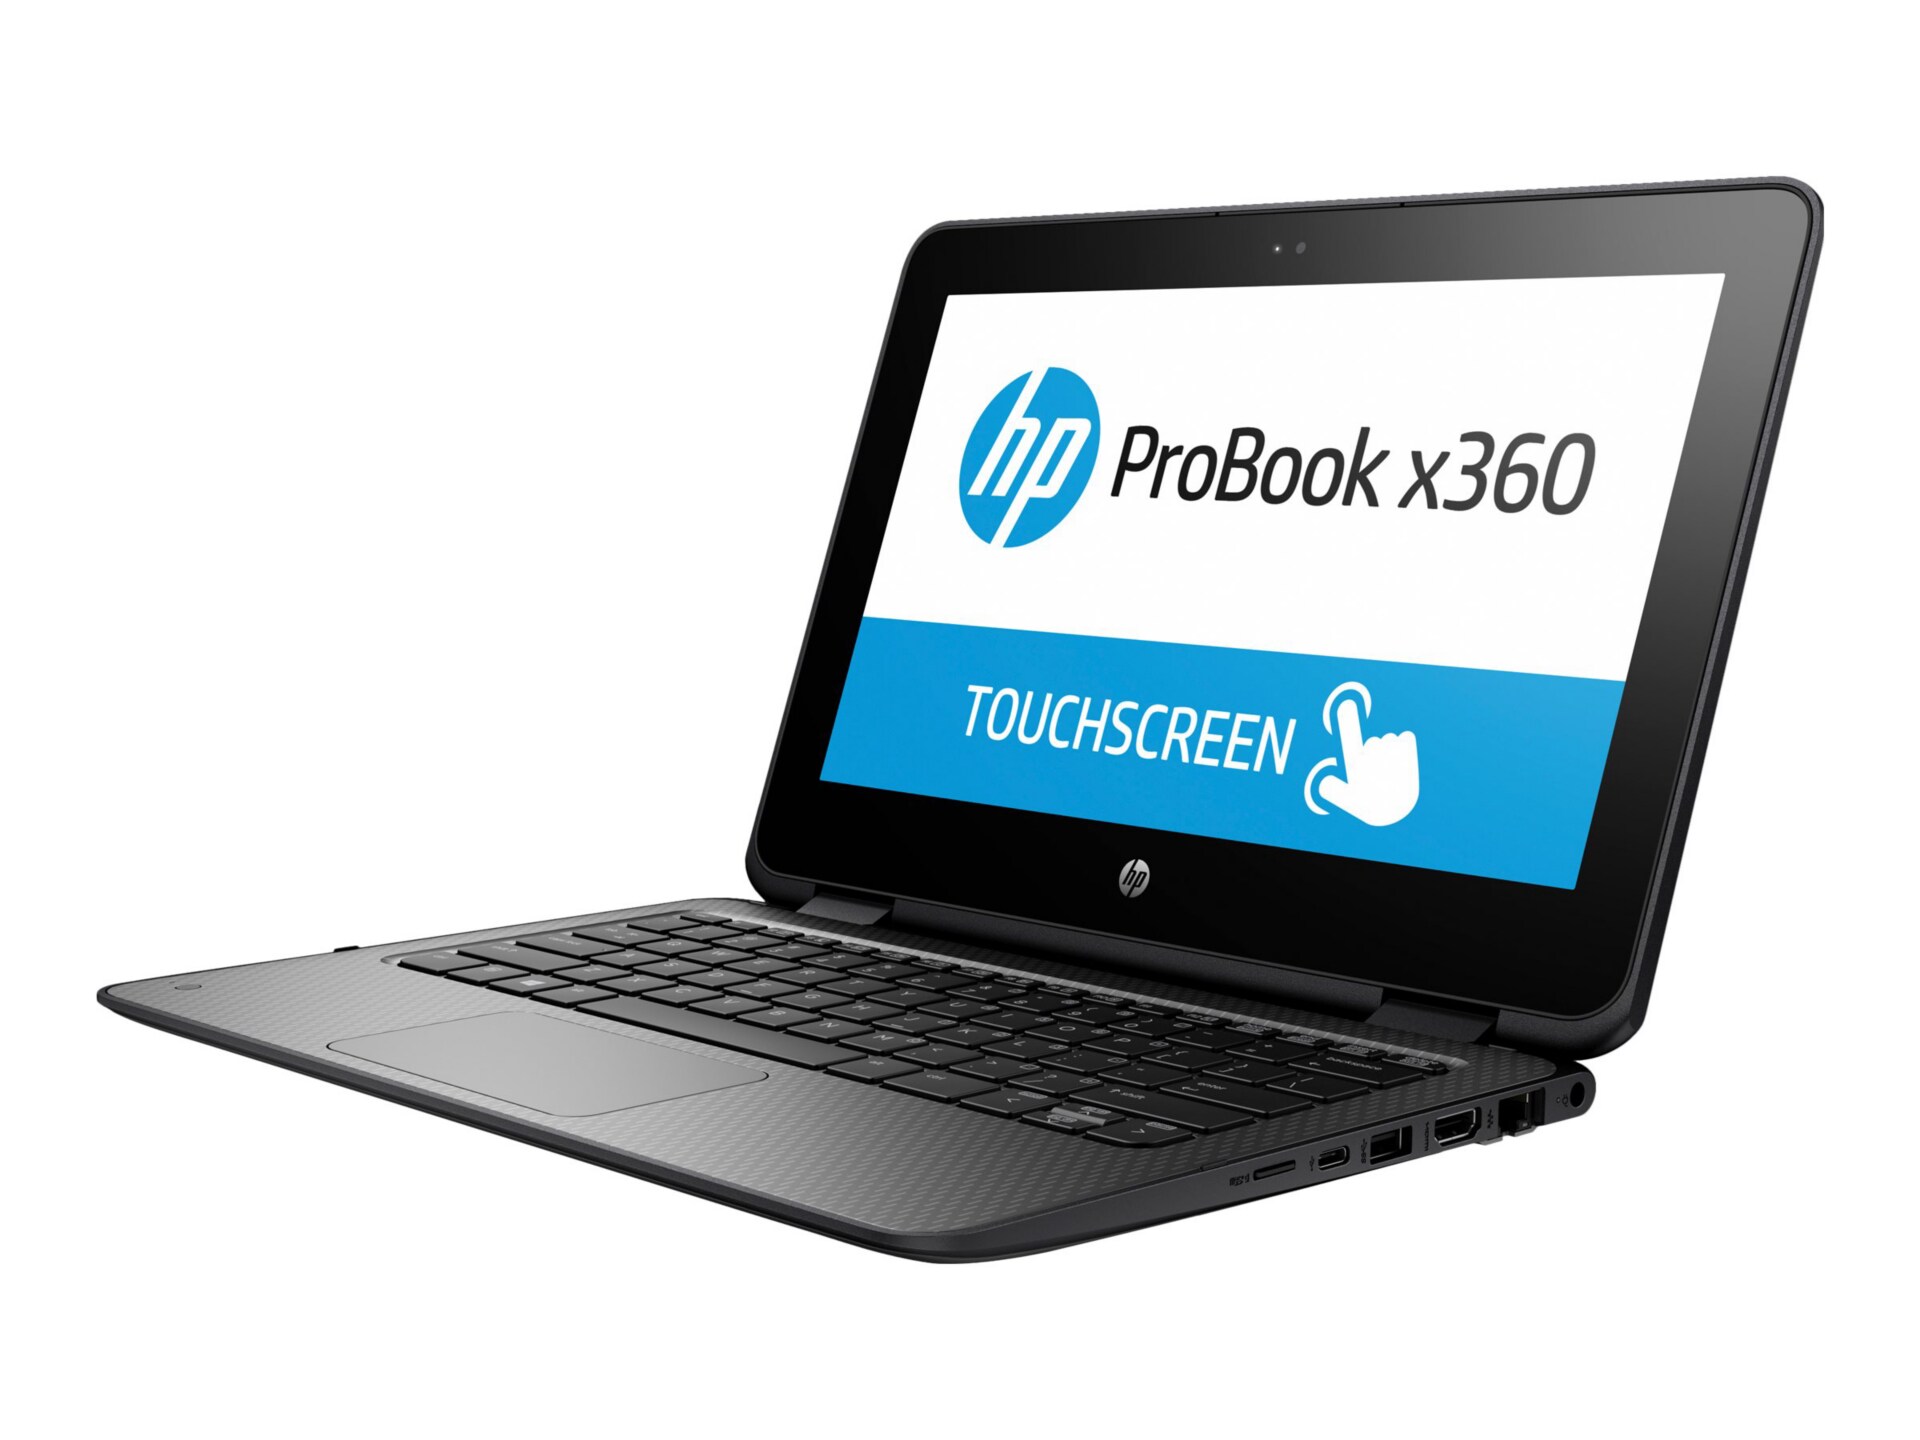 HP ProBook x360 11 G2 - Education Edition - 11.6" - Core m3 7Y30 - 4 GB RAM - 128 GB SSD - US